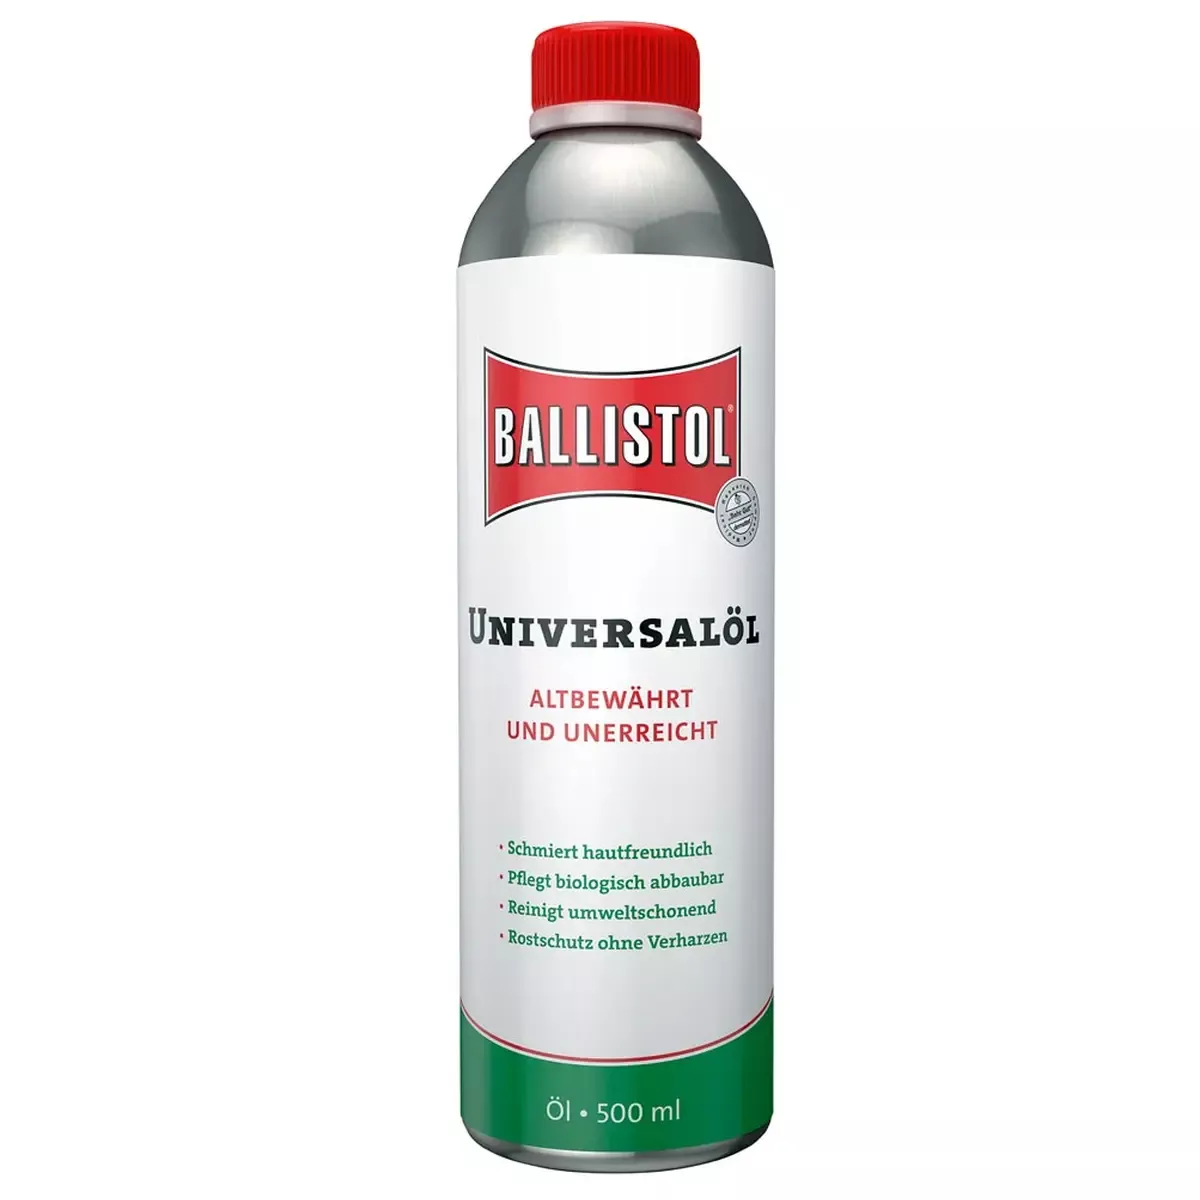 Betriebsmittel Universalöl Ballistol, Inhalt 500 ml, Dose für Betriebsbedarf